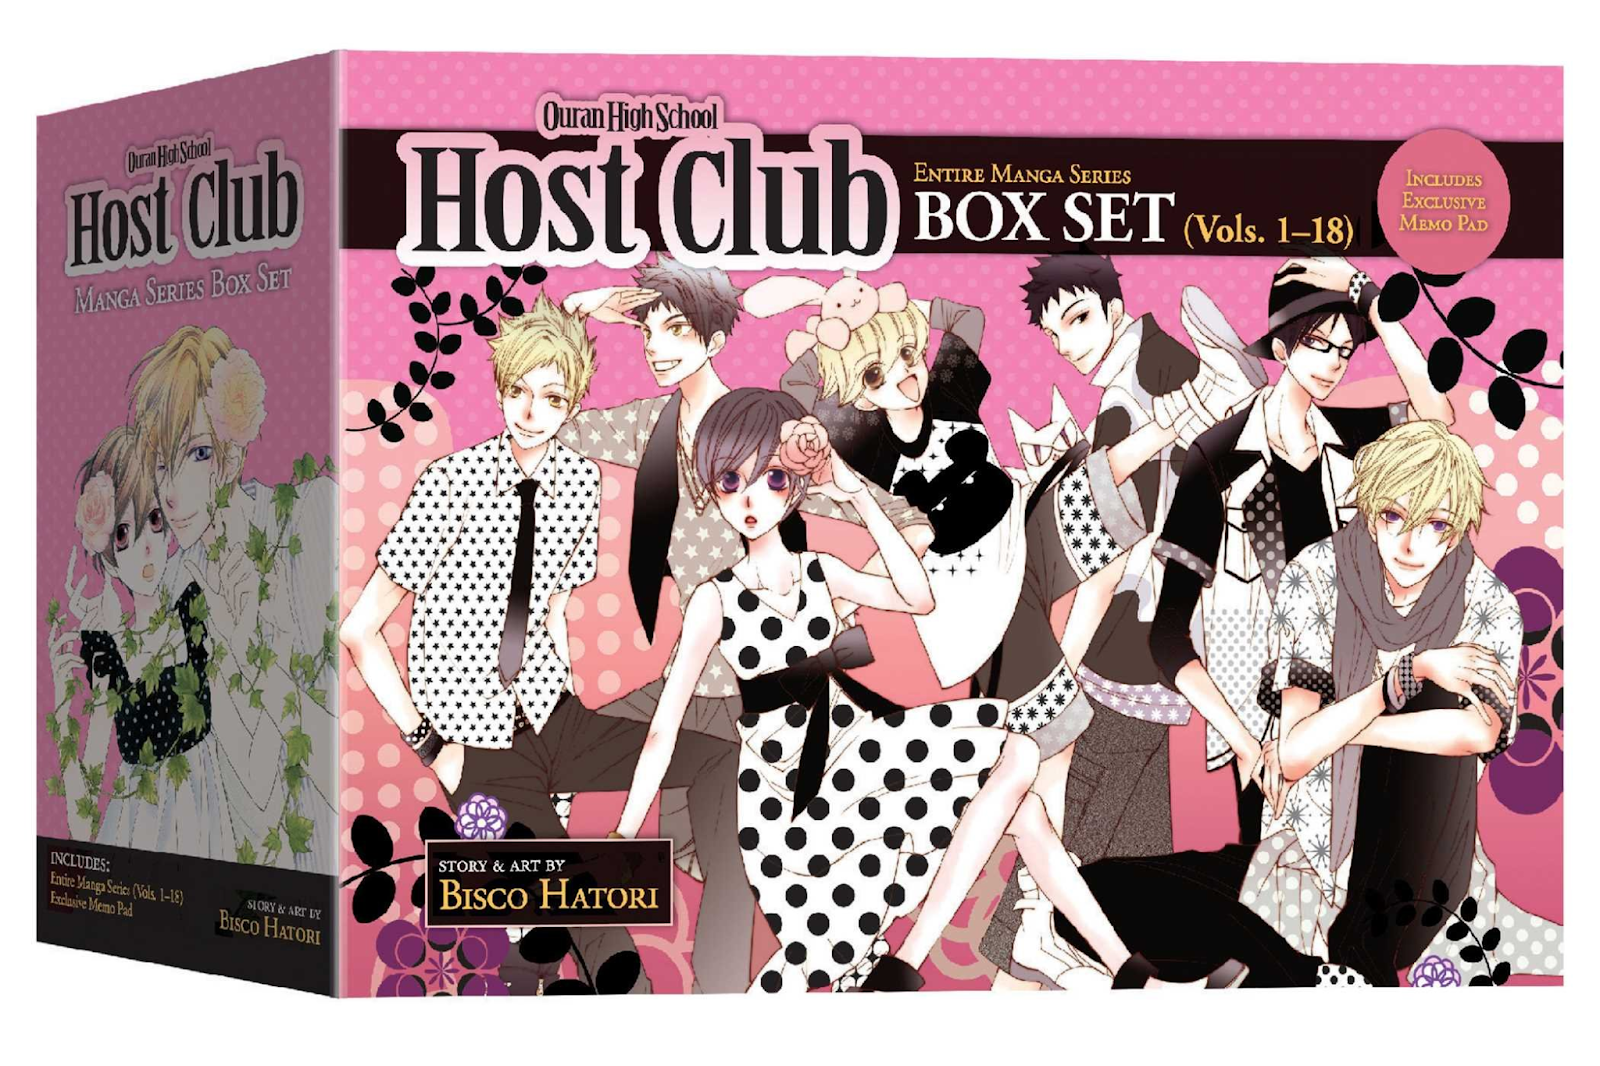 Ouran Highschool Host Club Manga Box Set is beautiful